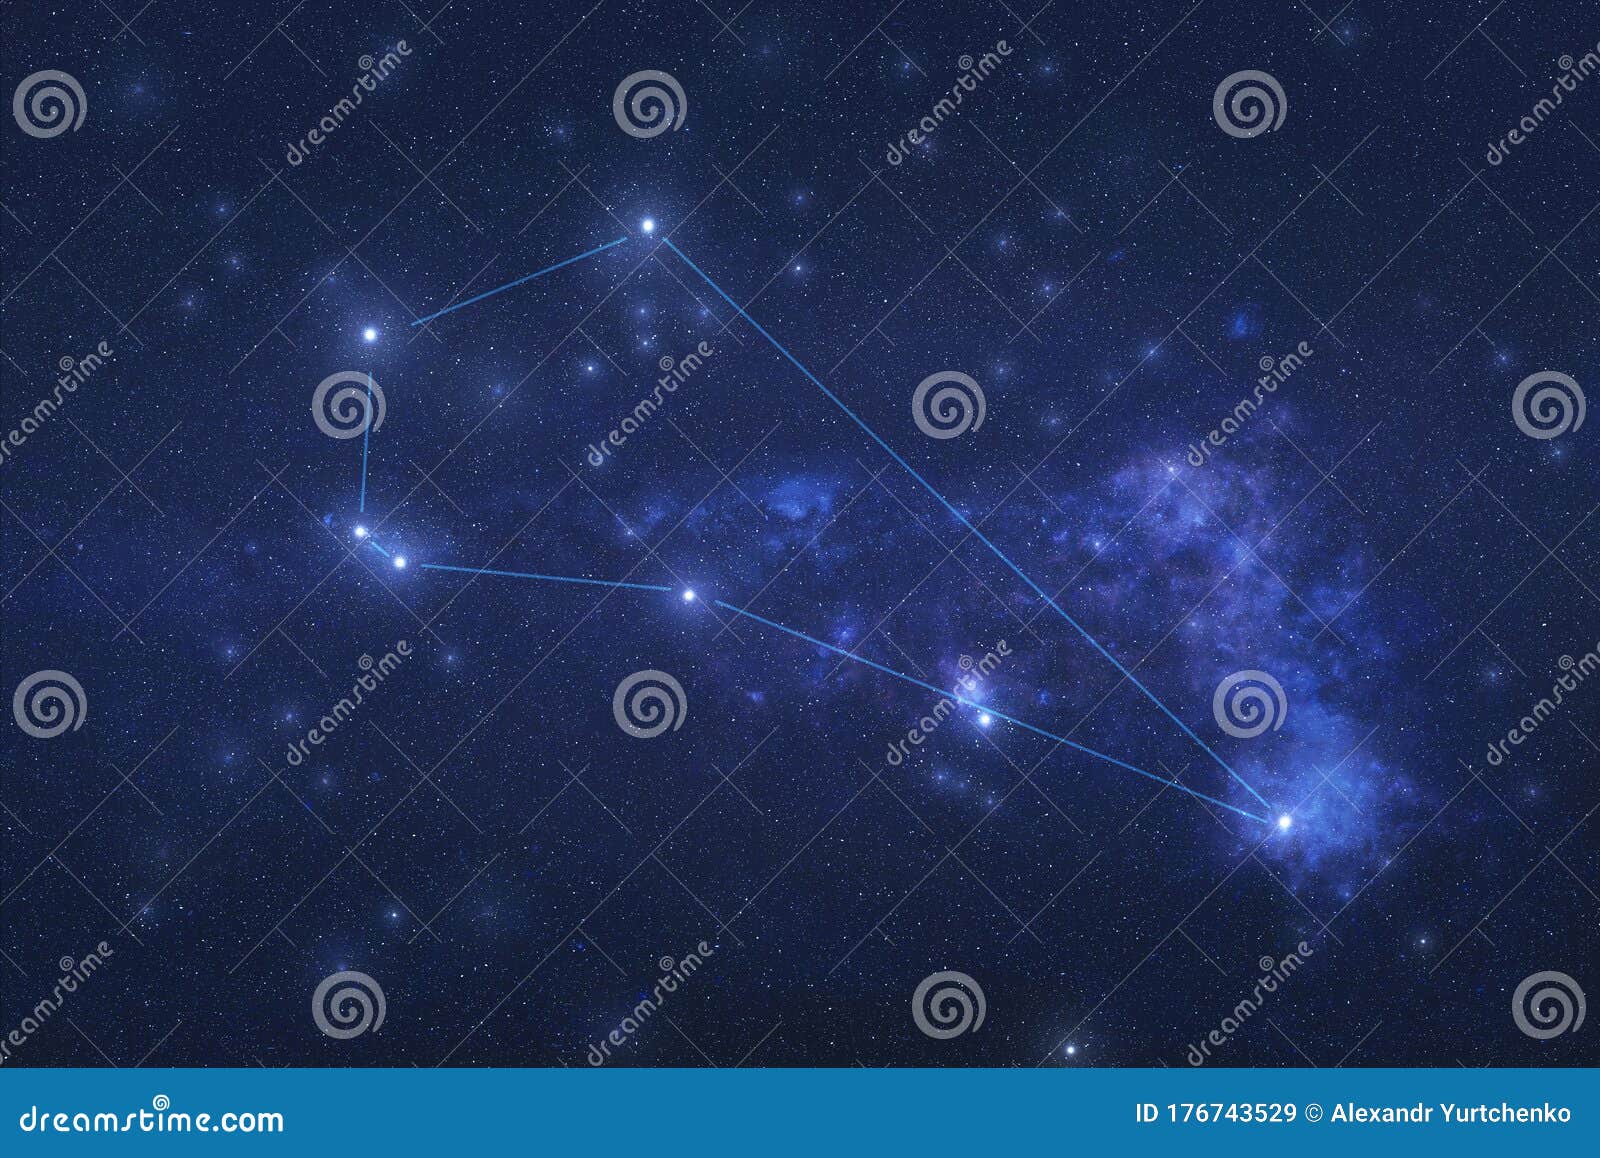 piscis austrinus constellation in outer space